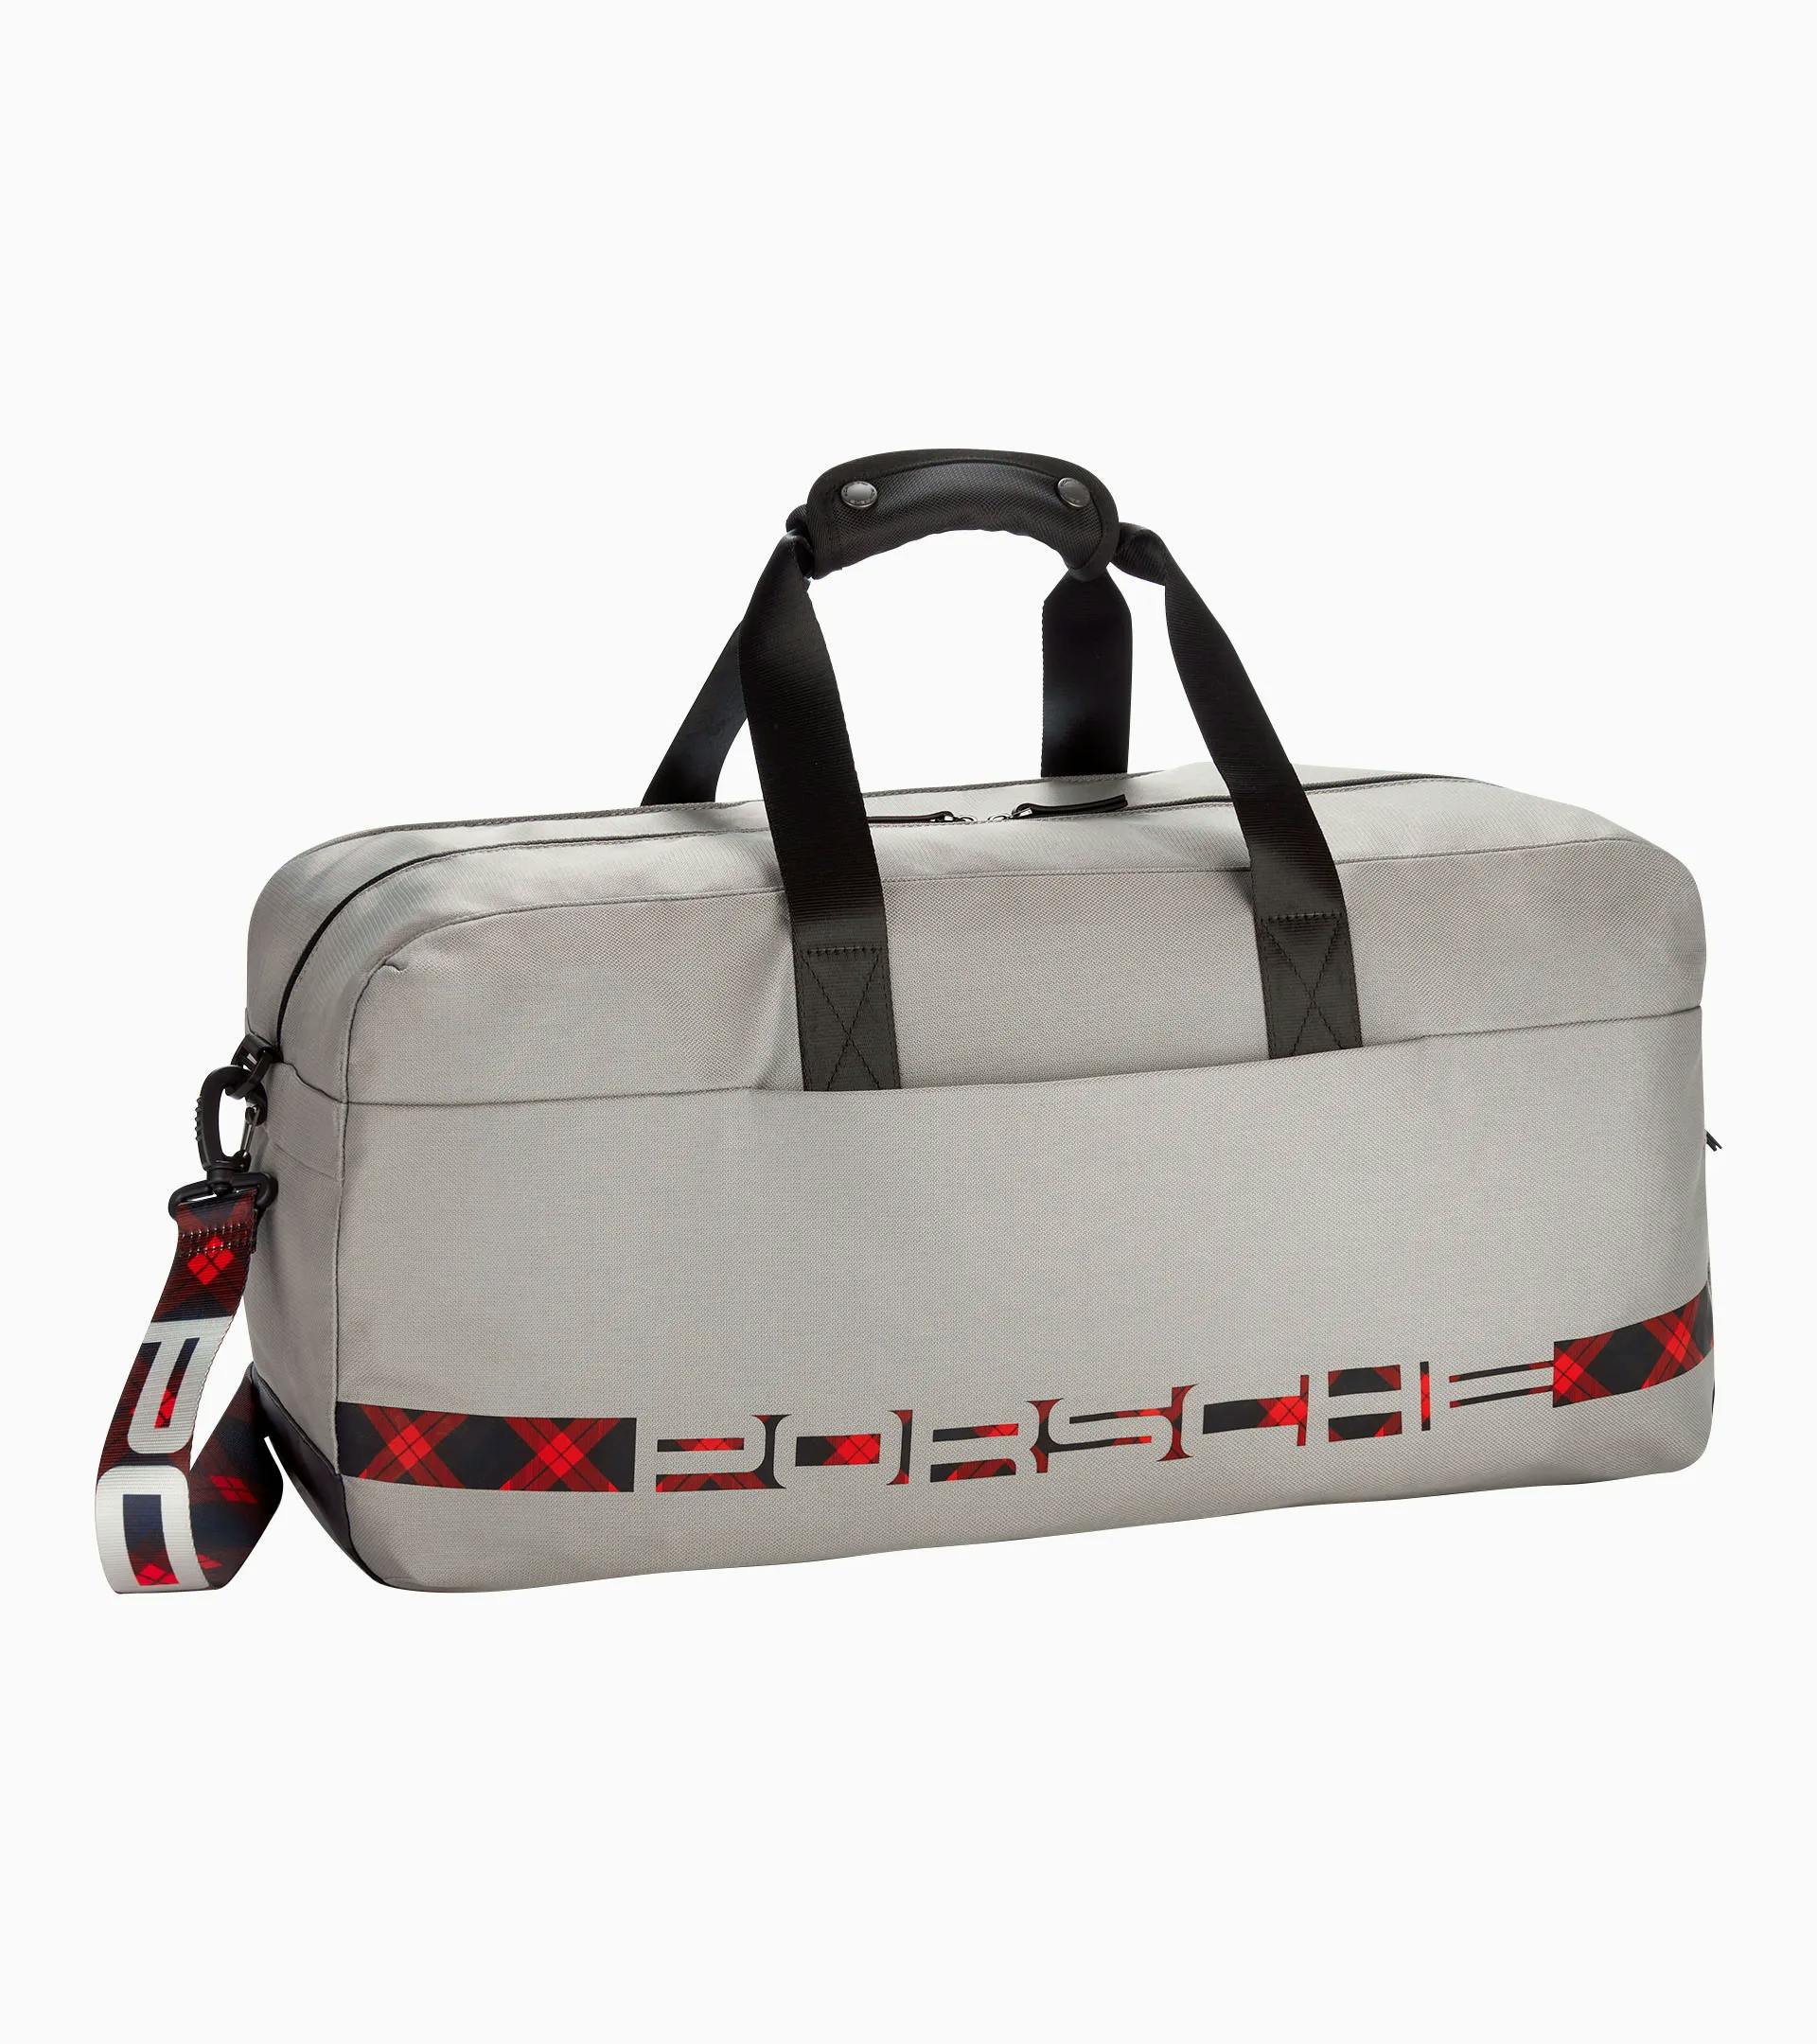 Travel bag – Turbo No. 1 6